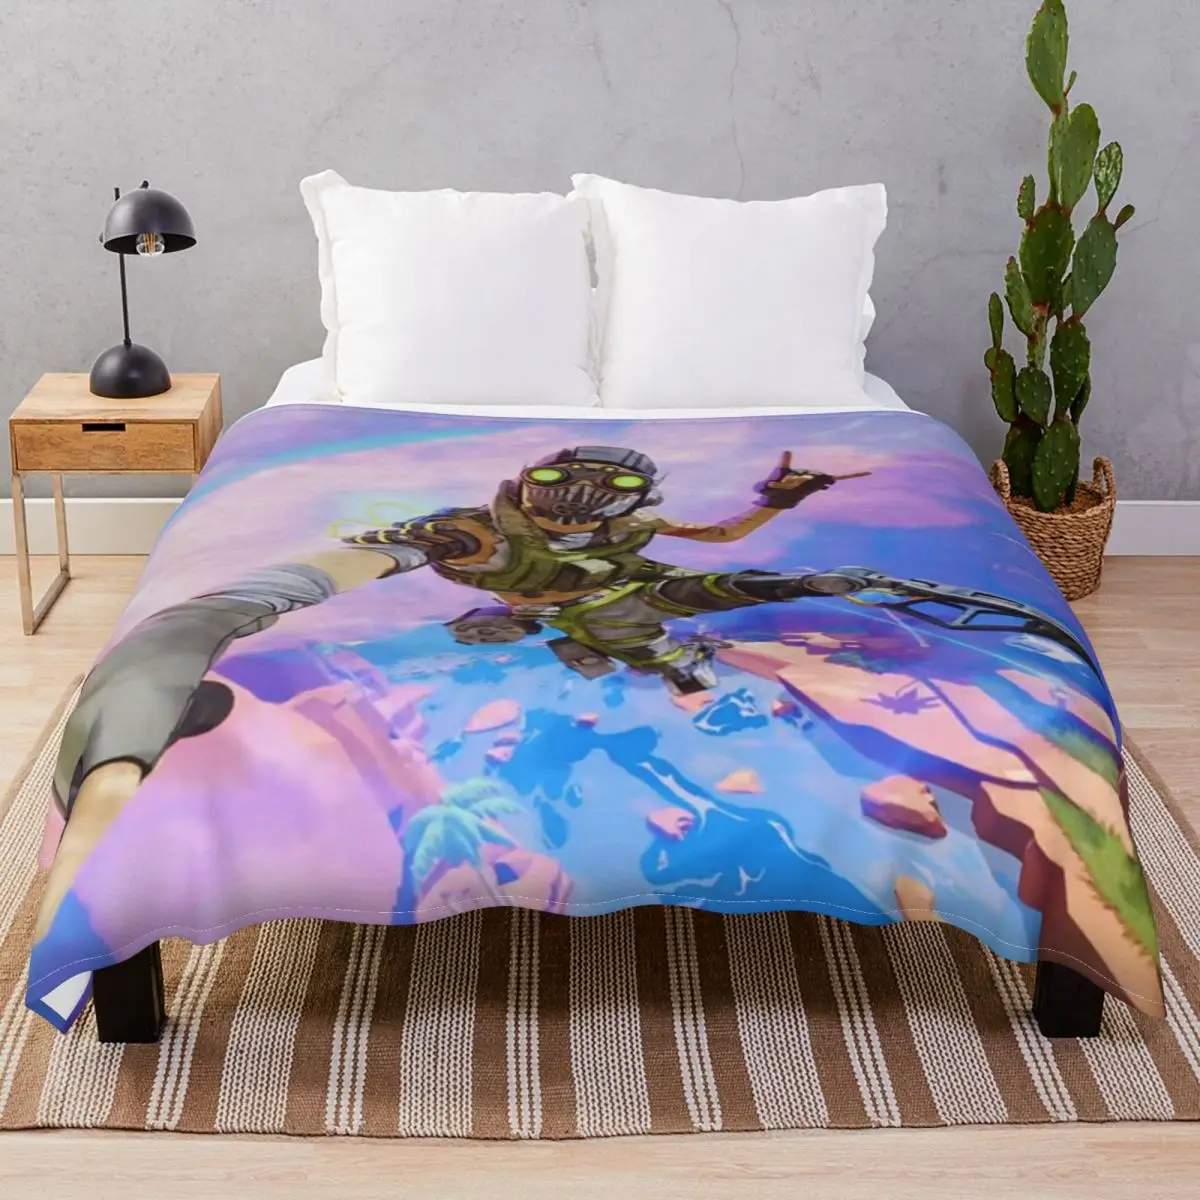 Apex Legends Octane Blankets Velvet Autumn Comfortable Unisex Throw Blanket for Bedding Home Couch Camp Office